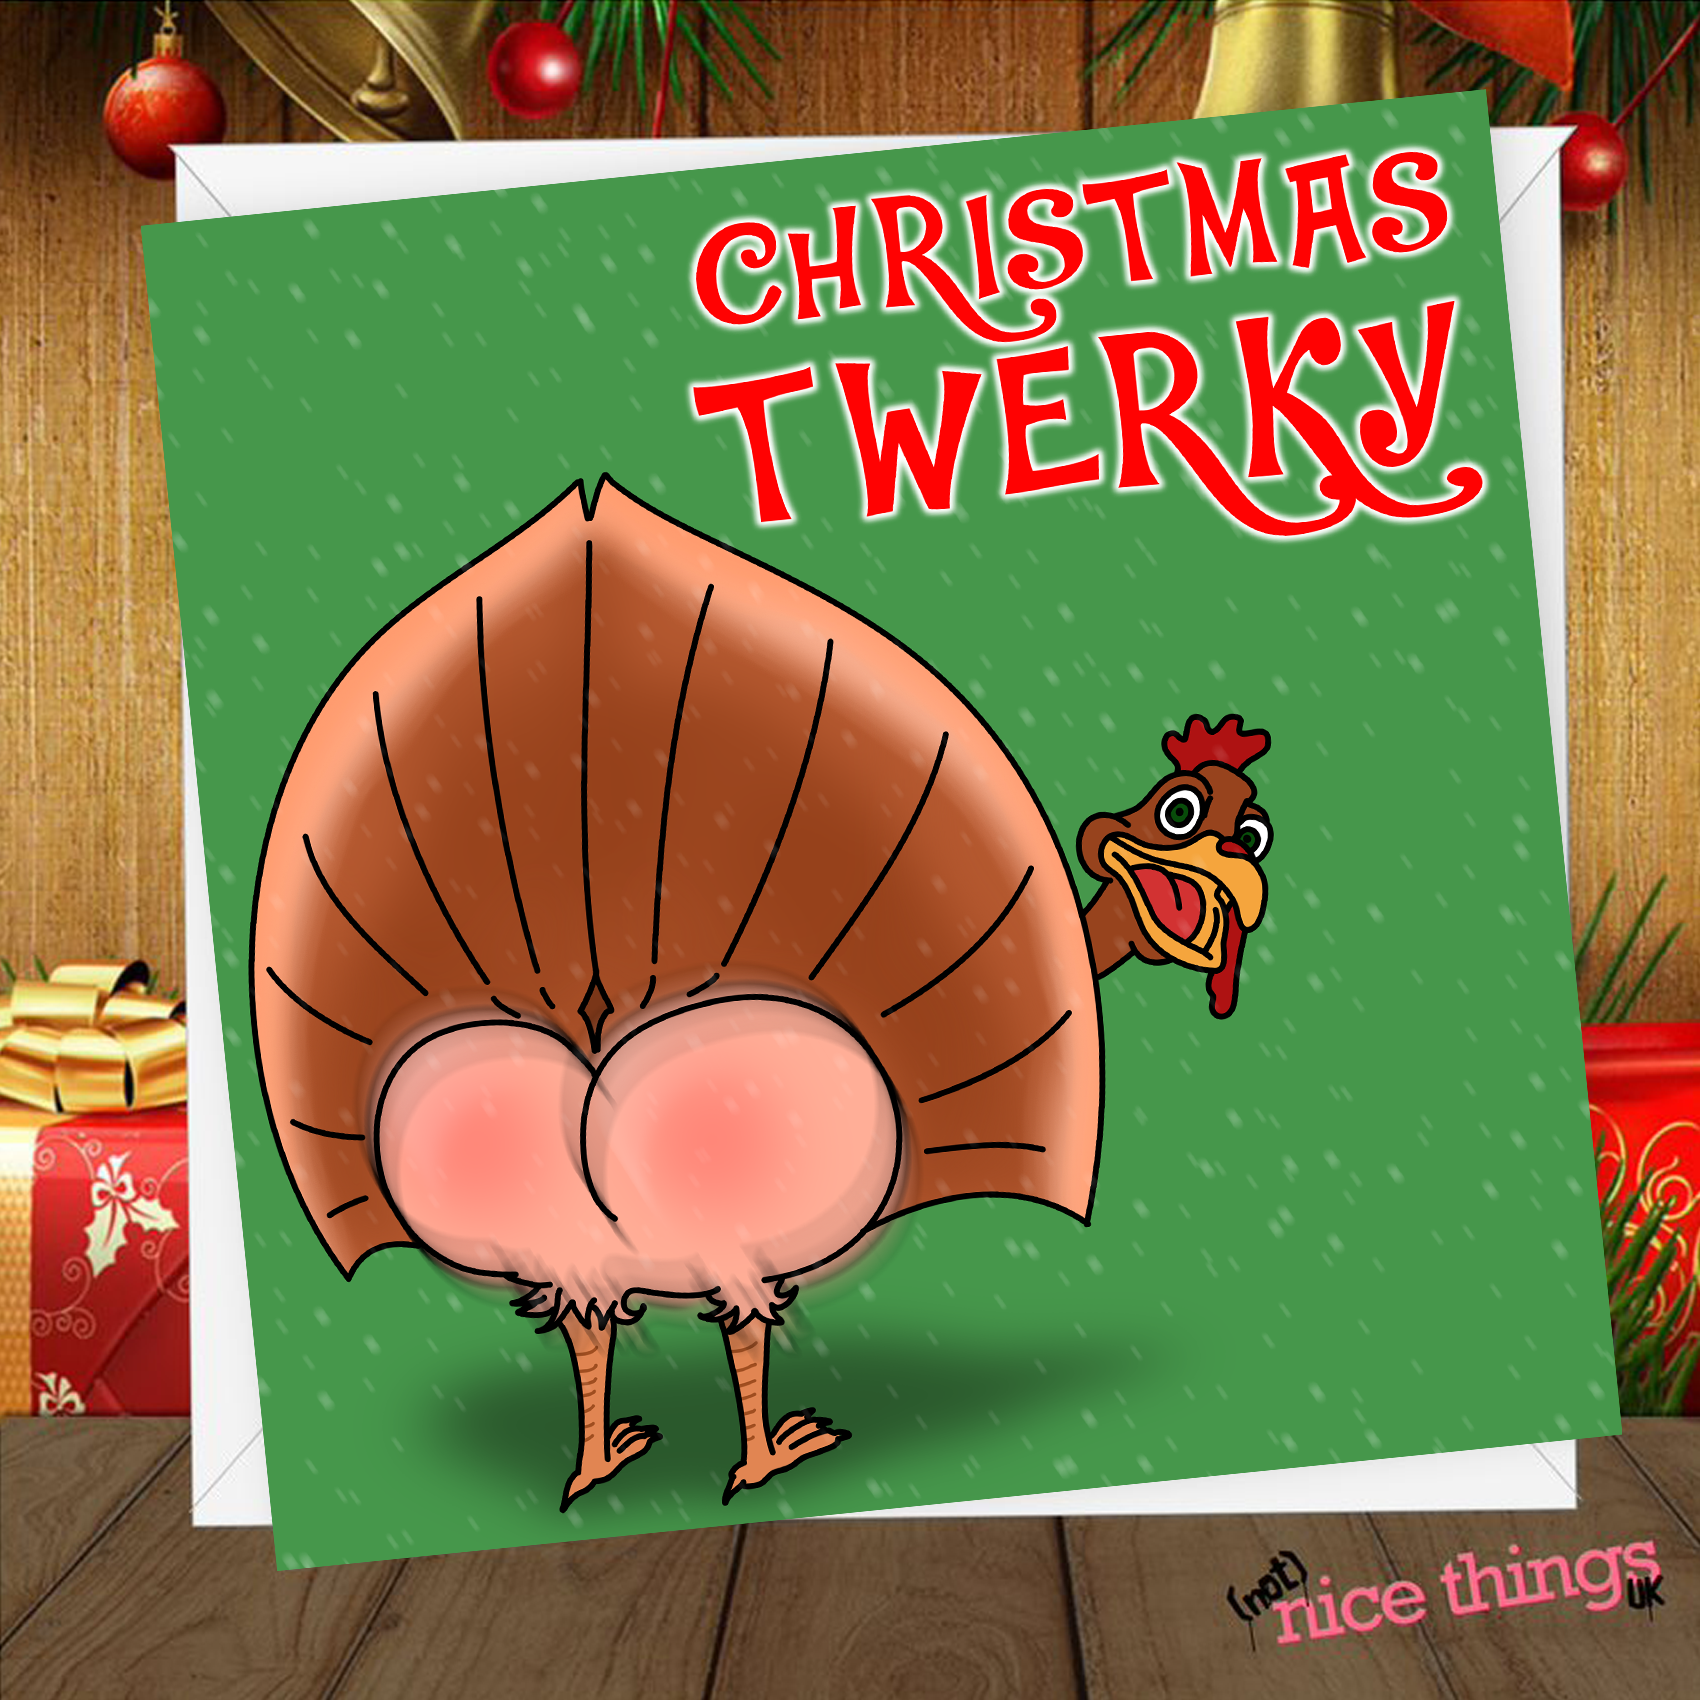 NotNiceThings Funny Christmas Twerky Card, Rude Christmas Cards for Her, Funny Christmas Card for Girlfriend, Gift for Her, Christmas Pun, Best Friend